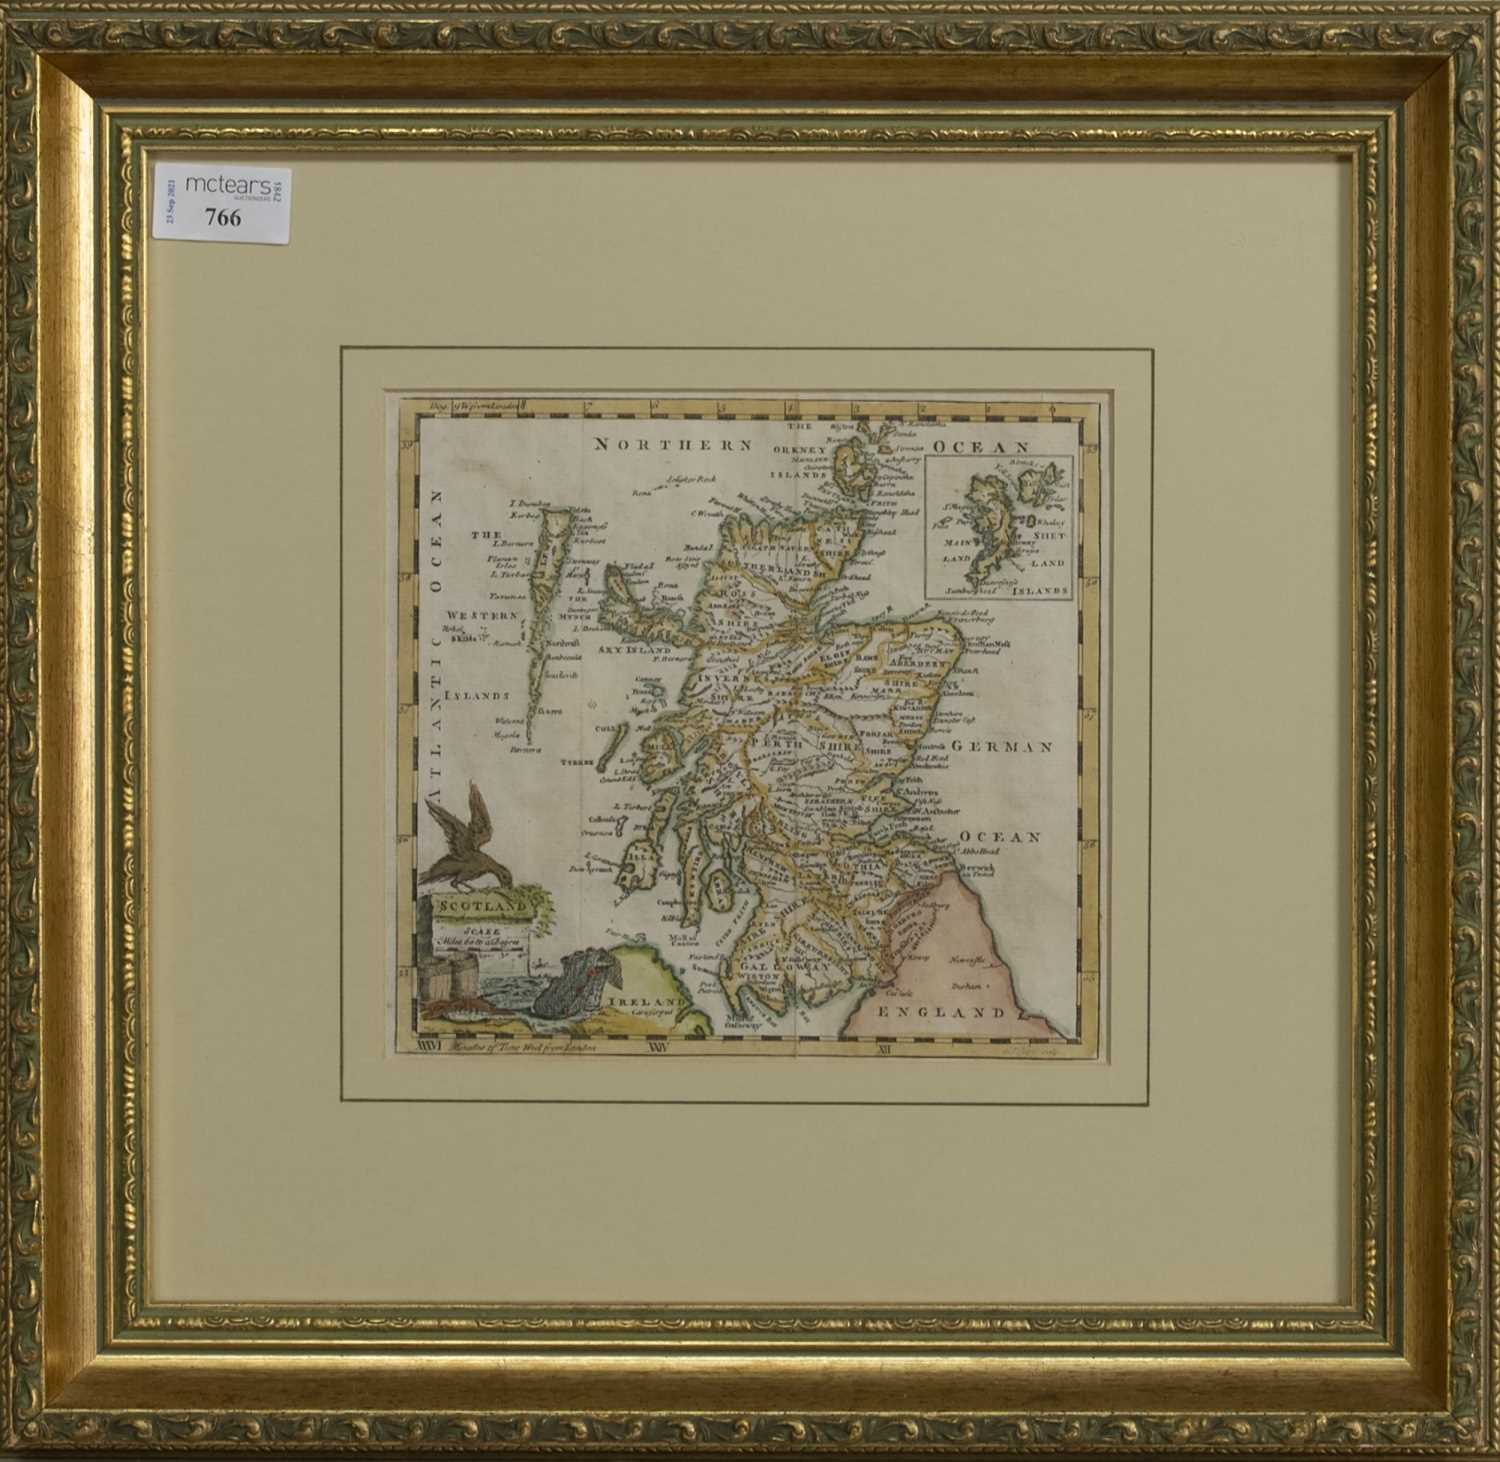 Lot 766 - AN 18TH CENTURY ENGRAVED MAP OF SCOTLAND BY THOMAS JEFFERYS